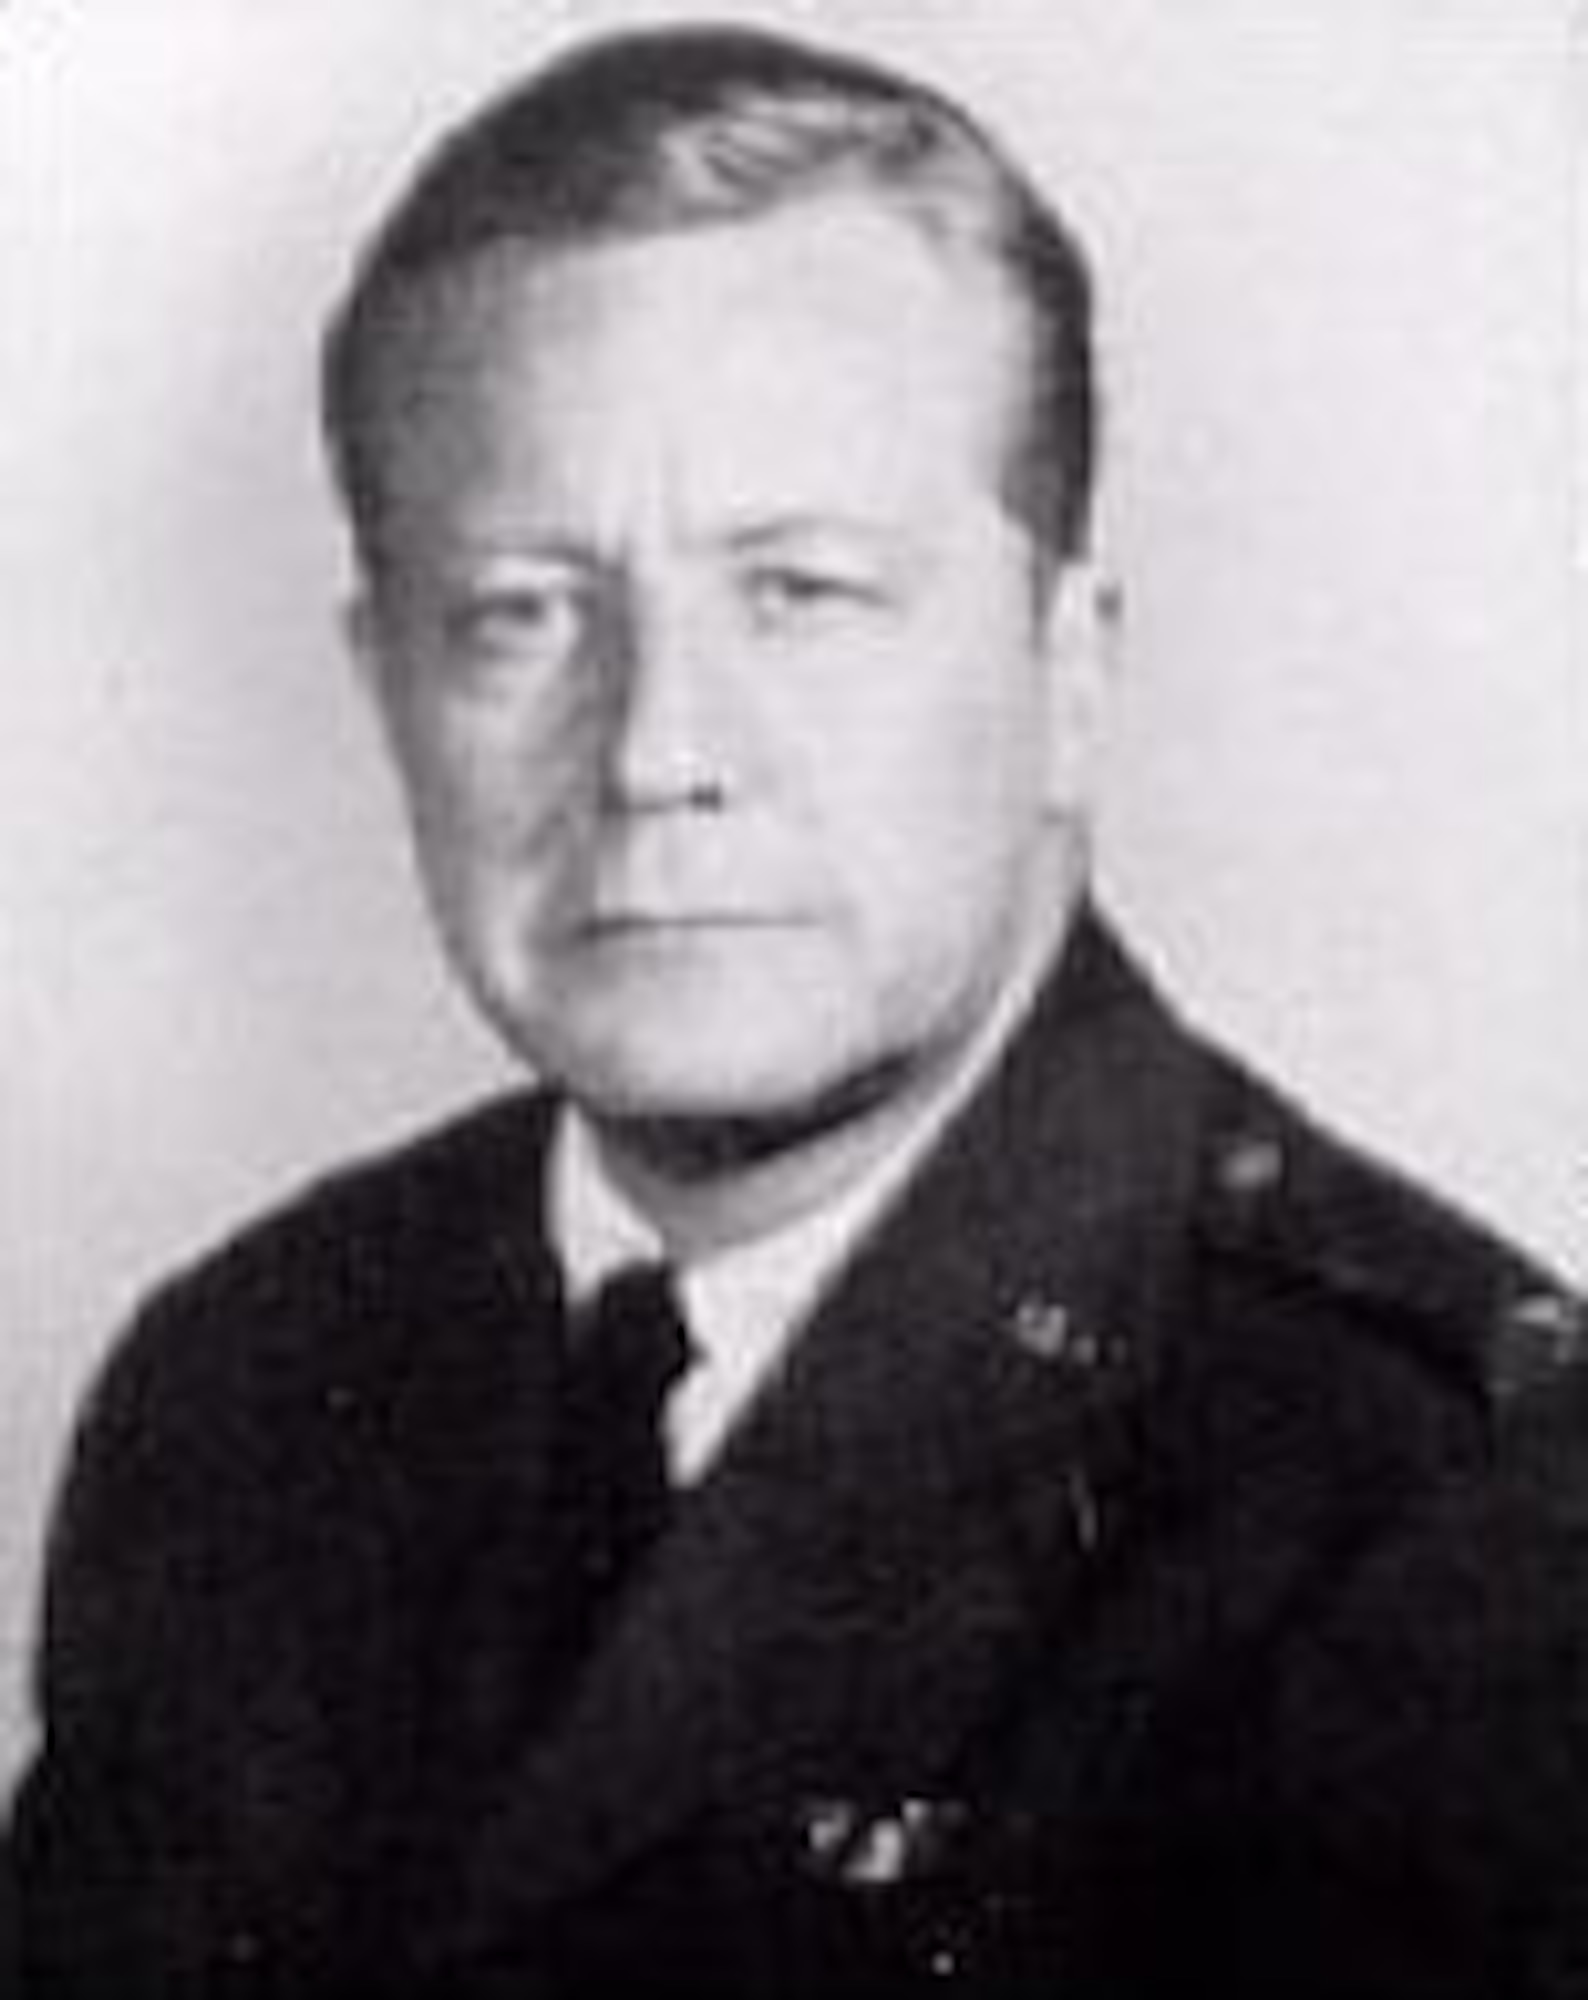 Col. Gene Raymond, USAF Reserve, in 1960. (U.S. Air Force photo)